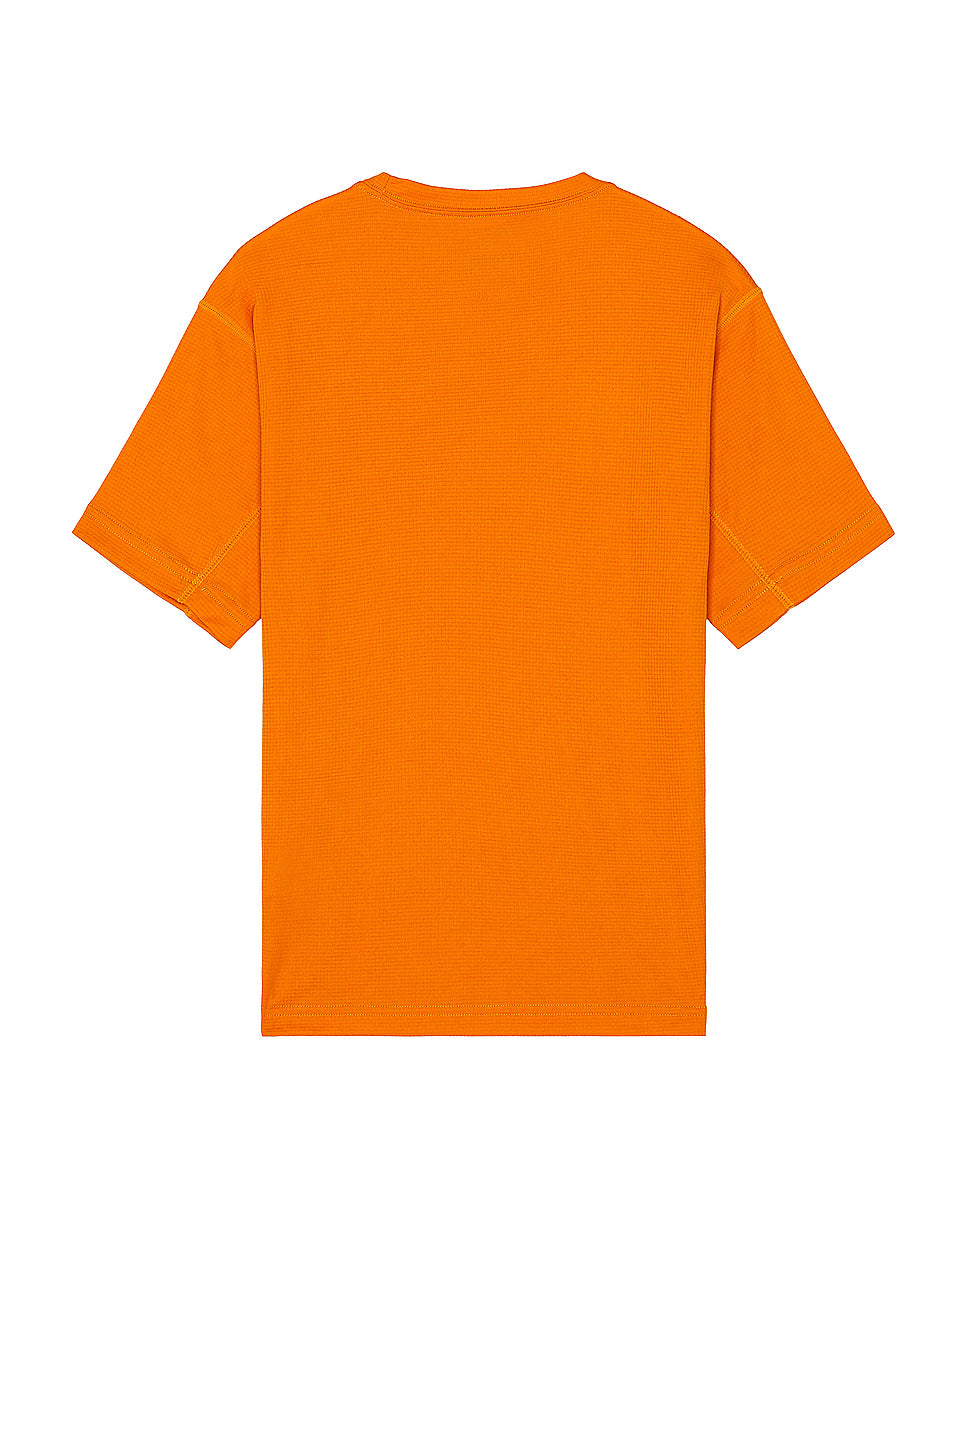 Pe Power Dry Short Sleeve T-Shirt